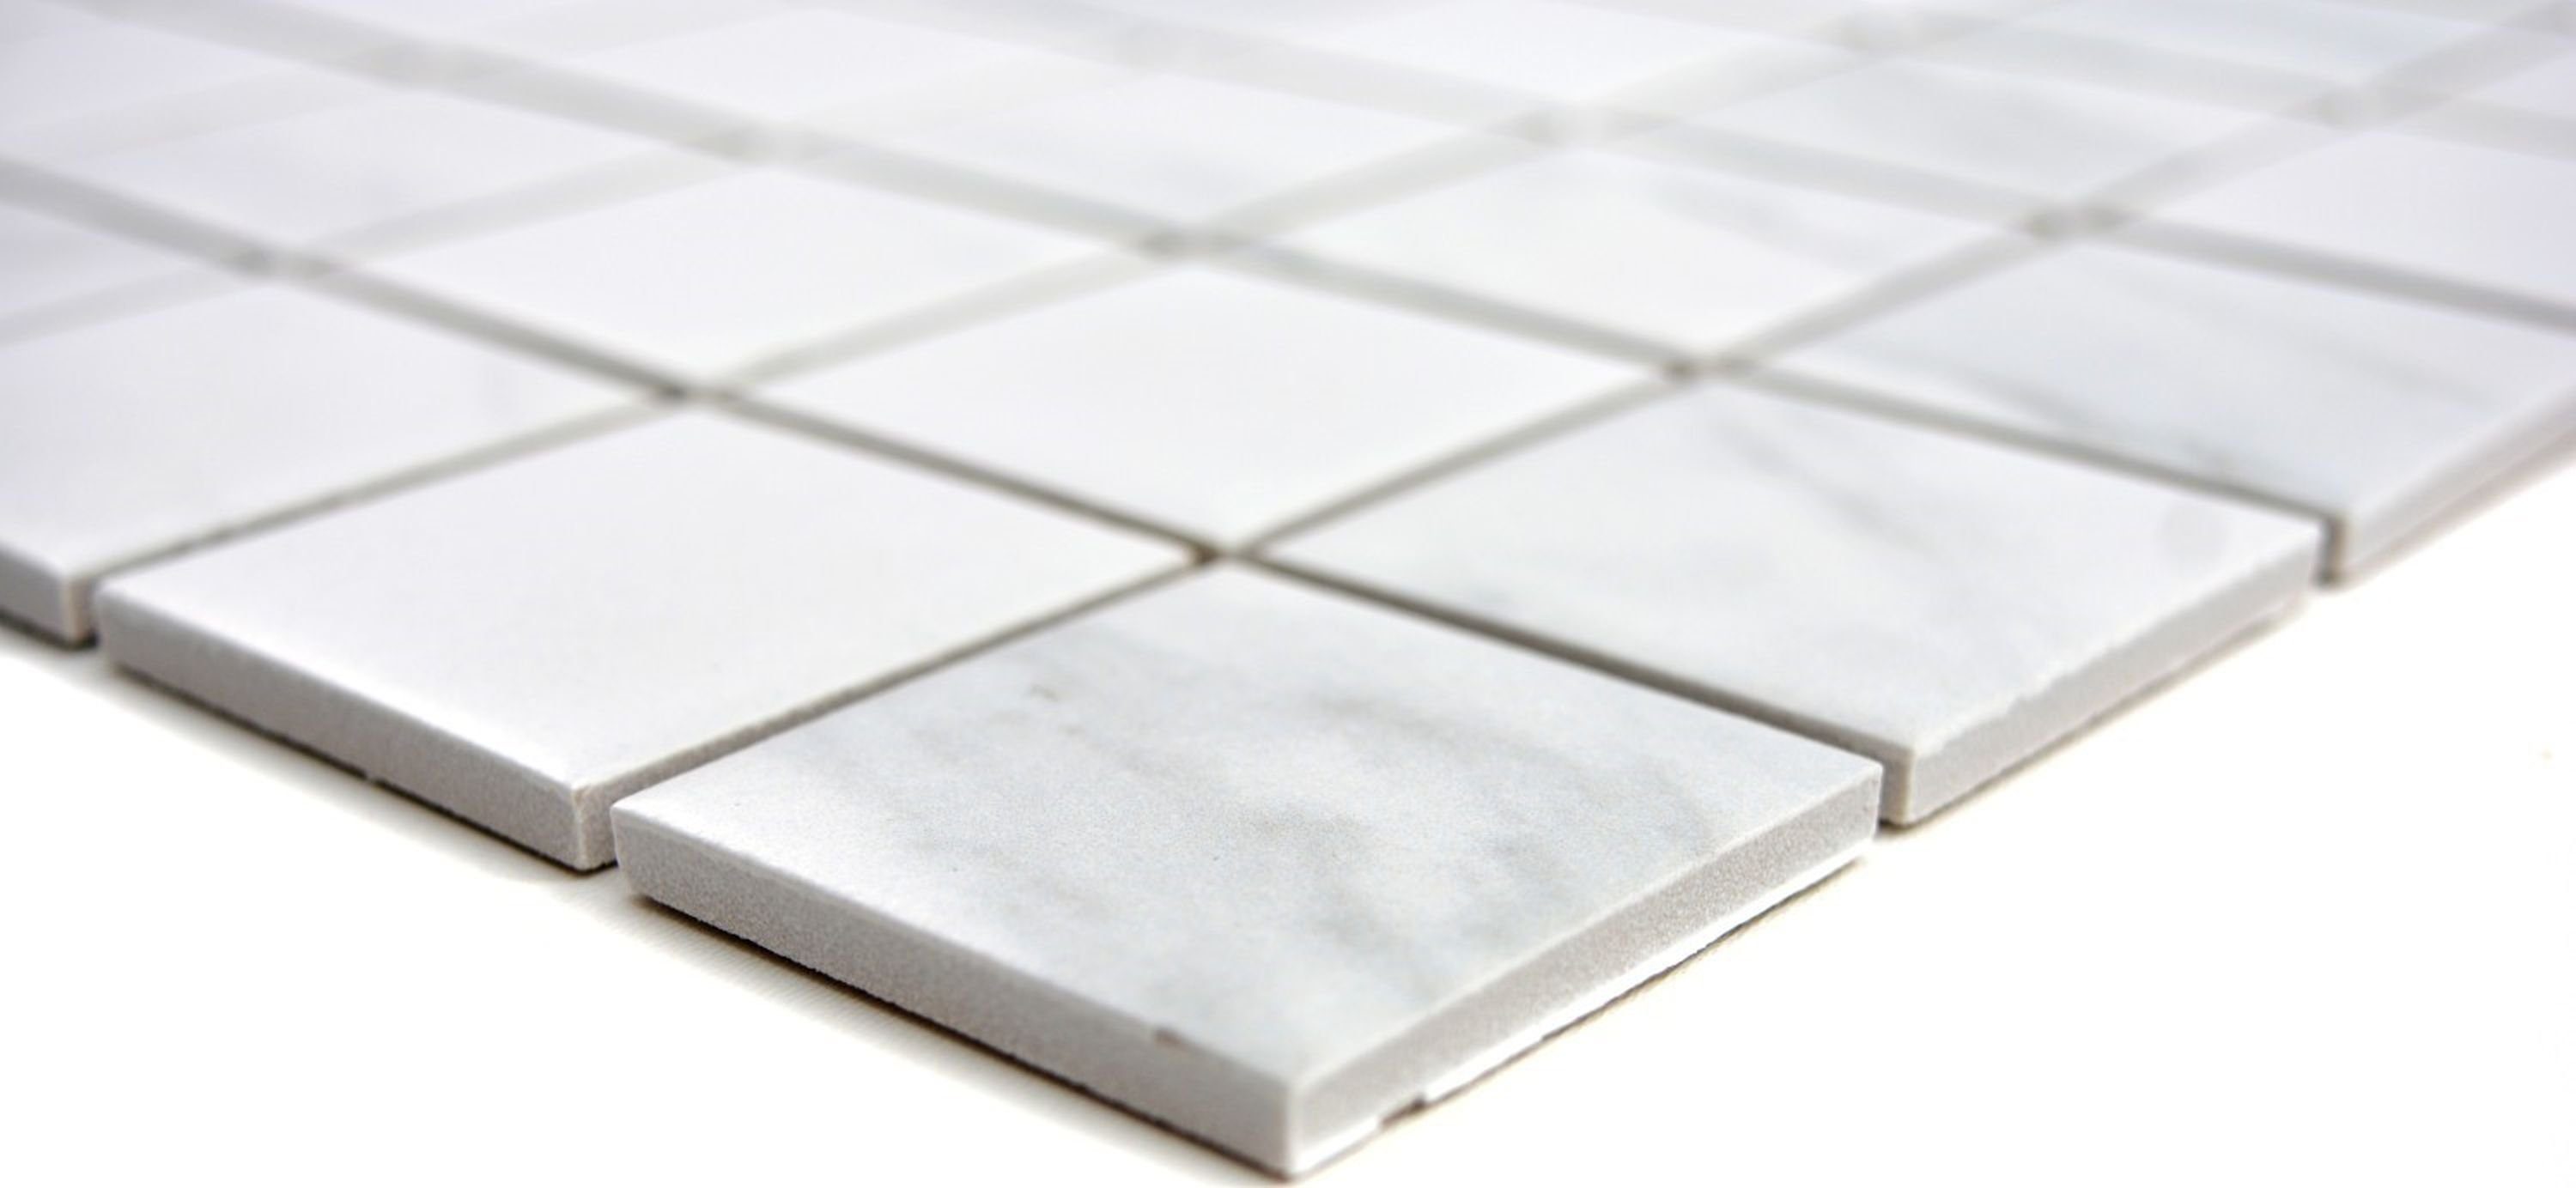 Mosani Mosaikfliesen Keramik Bad weiß Carrara Küche Fliese Fliesenspiegel grau Mosaik